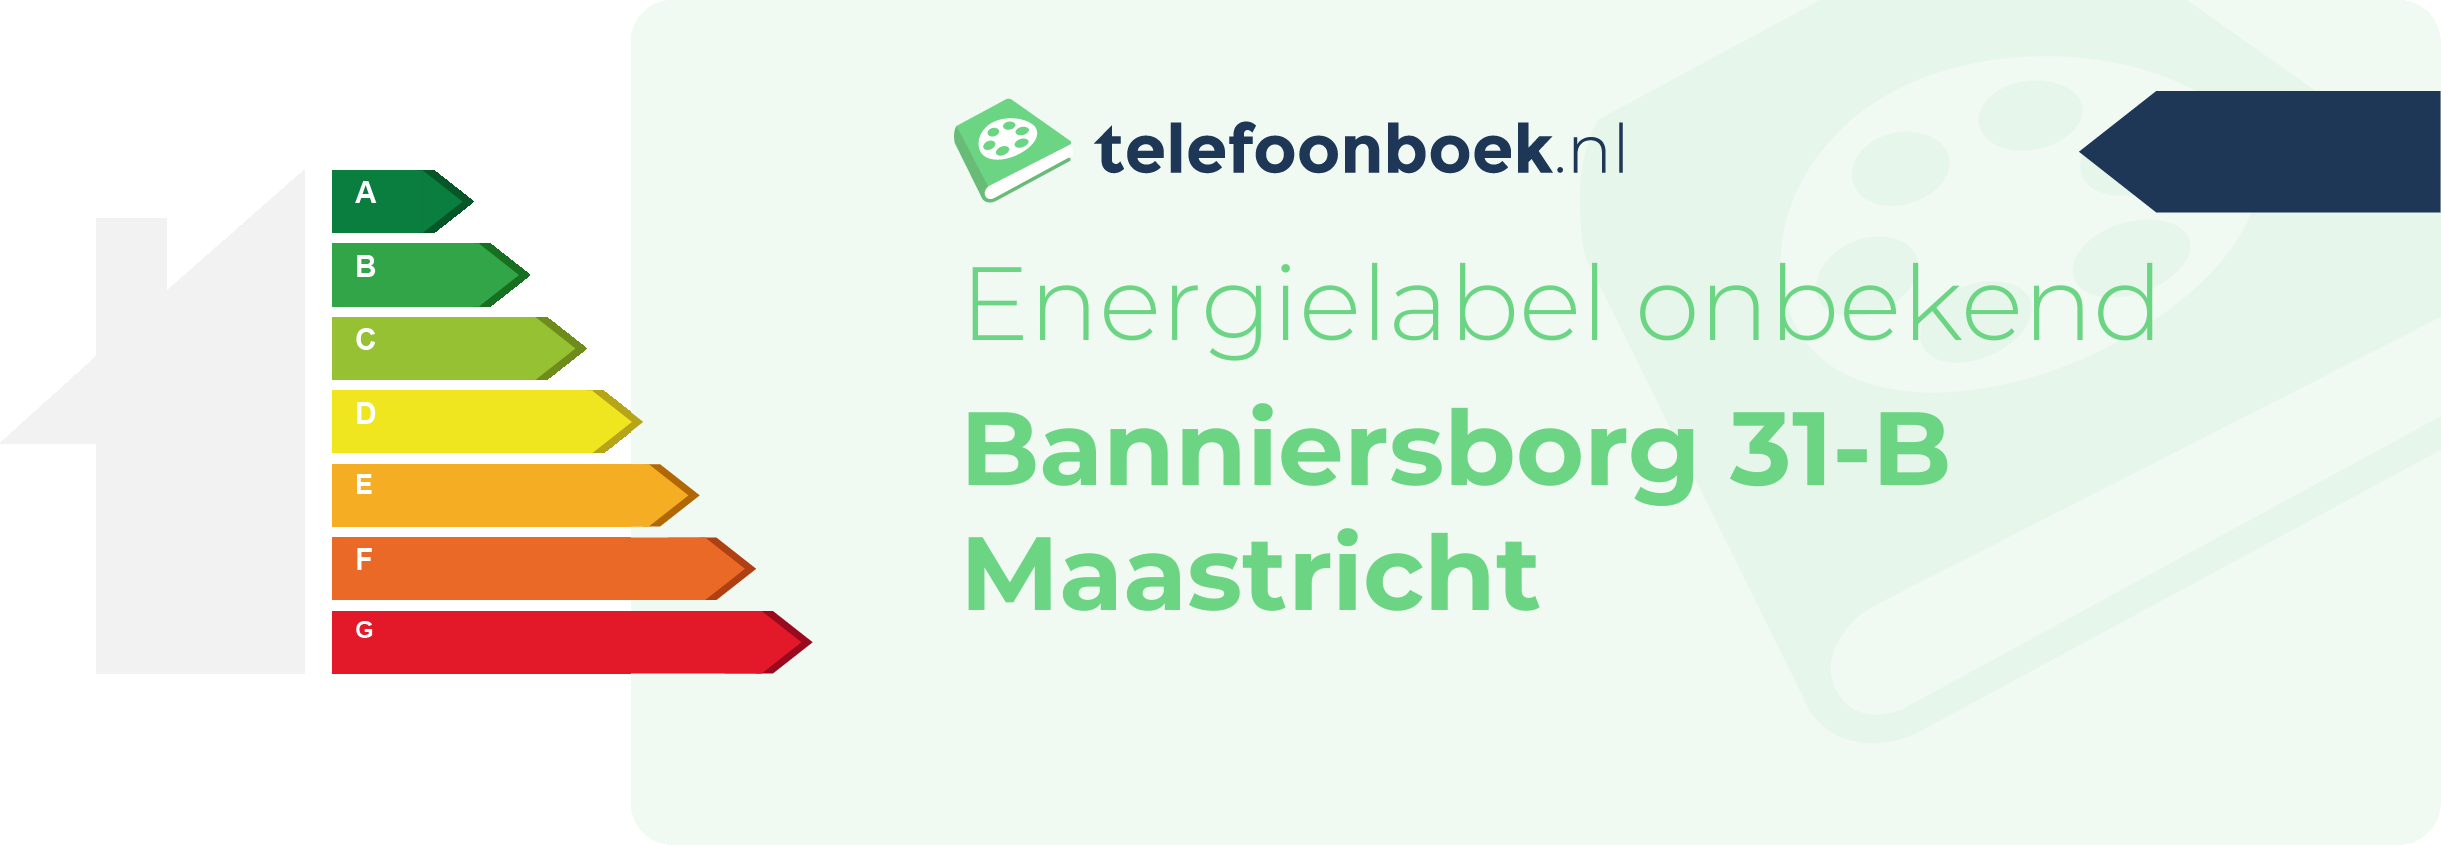 Energielabel Banniersborg 31-B Maastricht